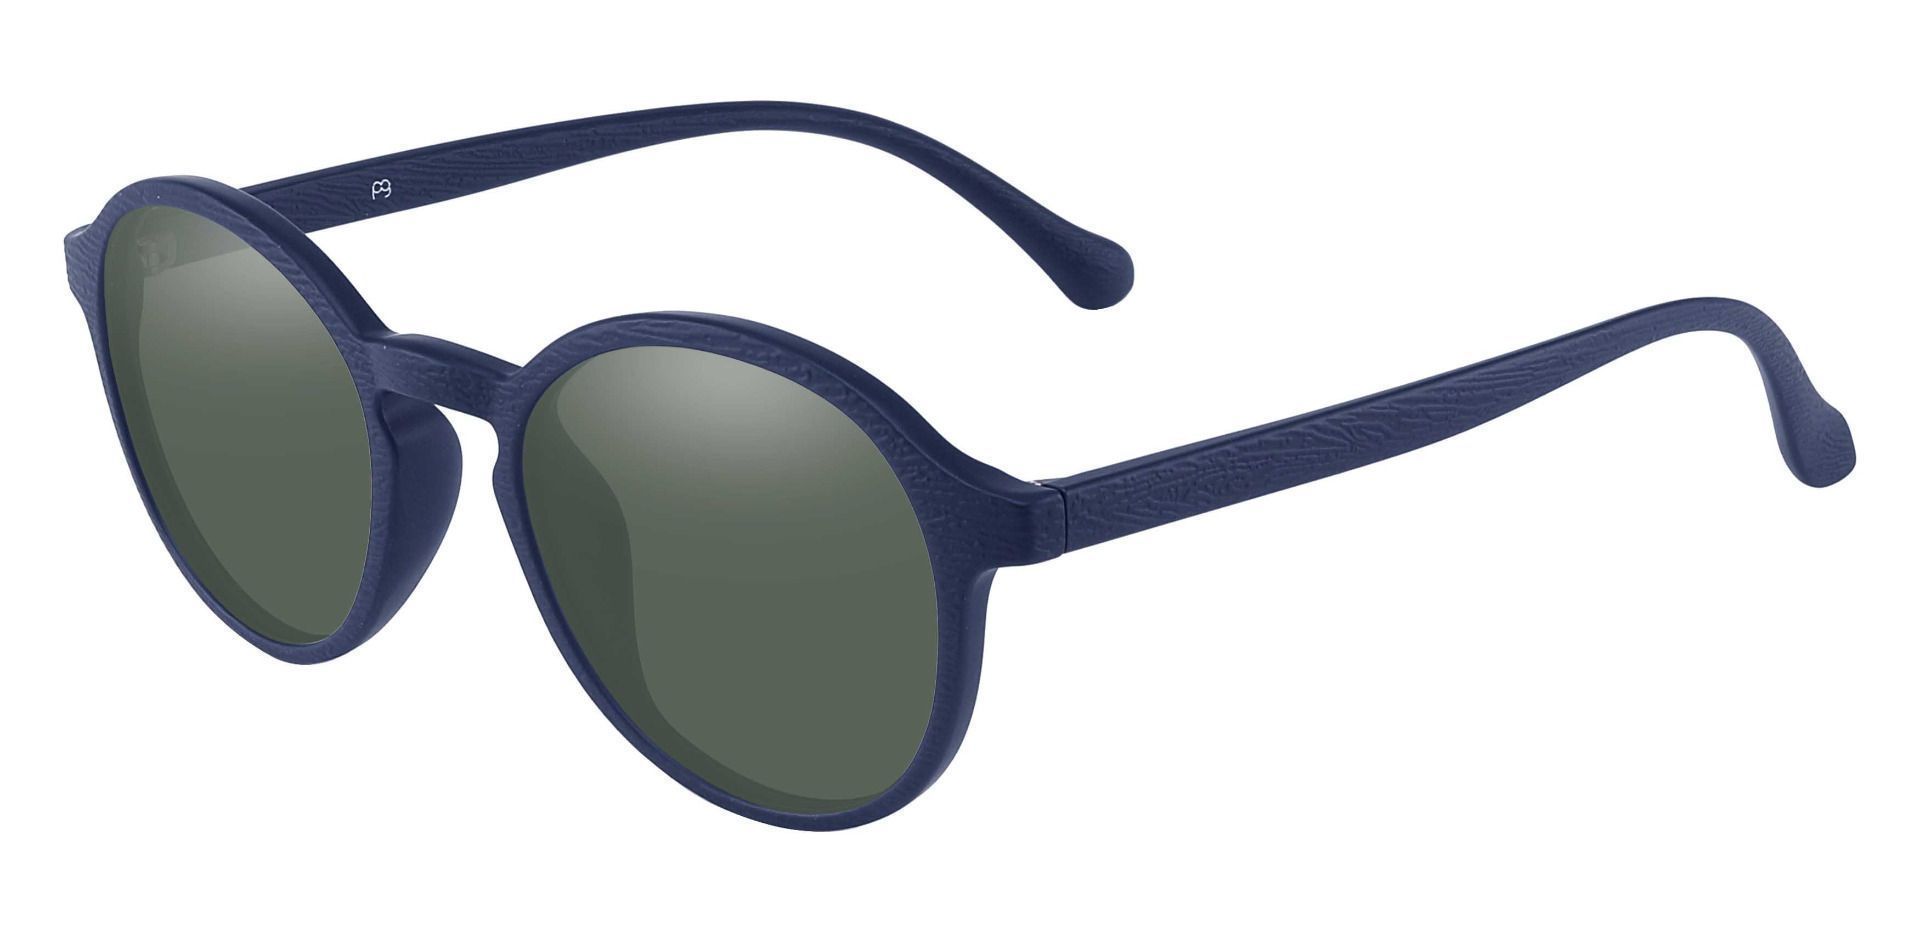 Whitney Round Progressive Sunglasses - Blue Frame With Green Lenses